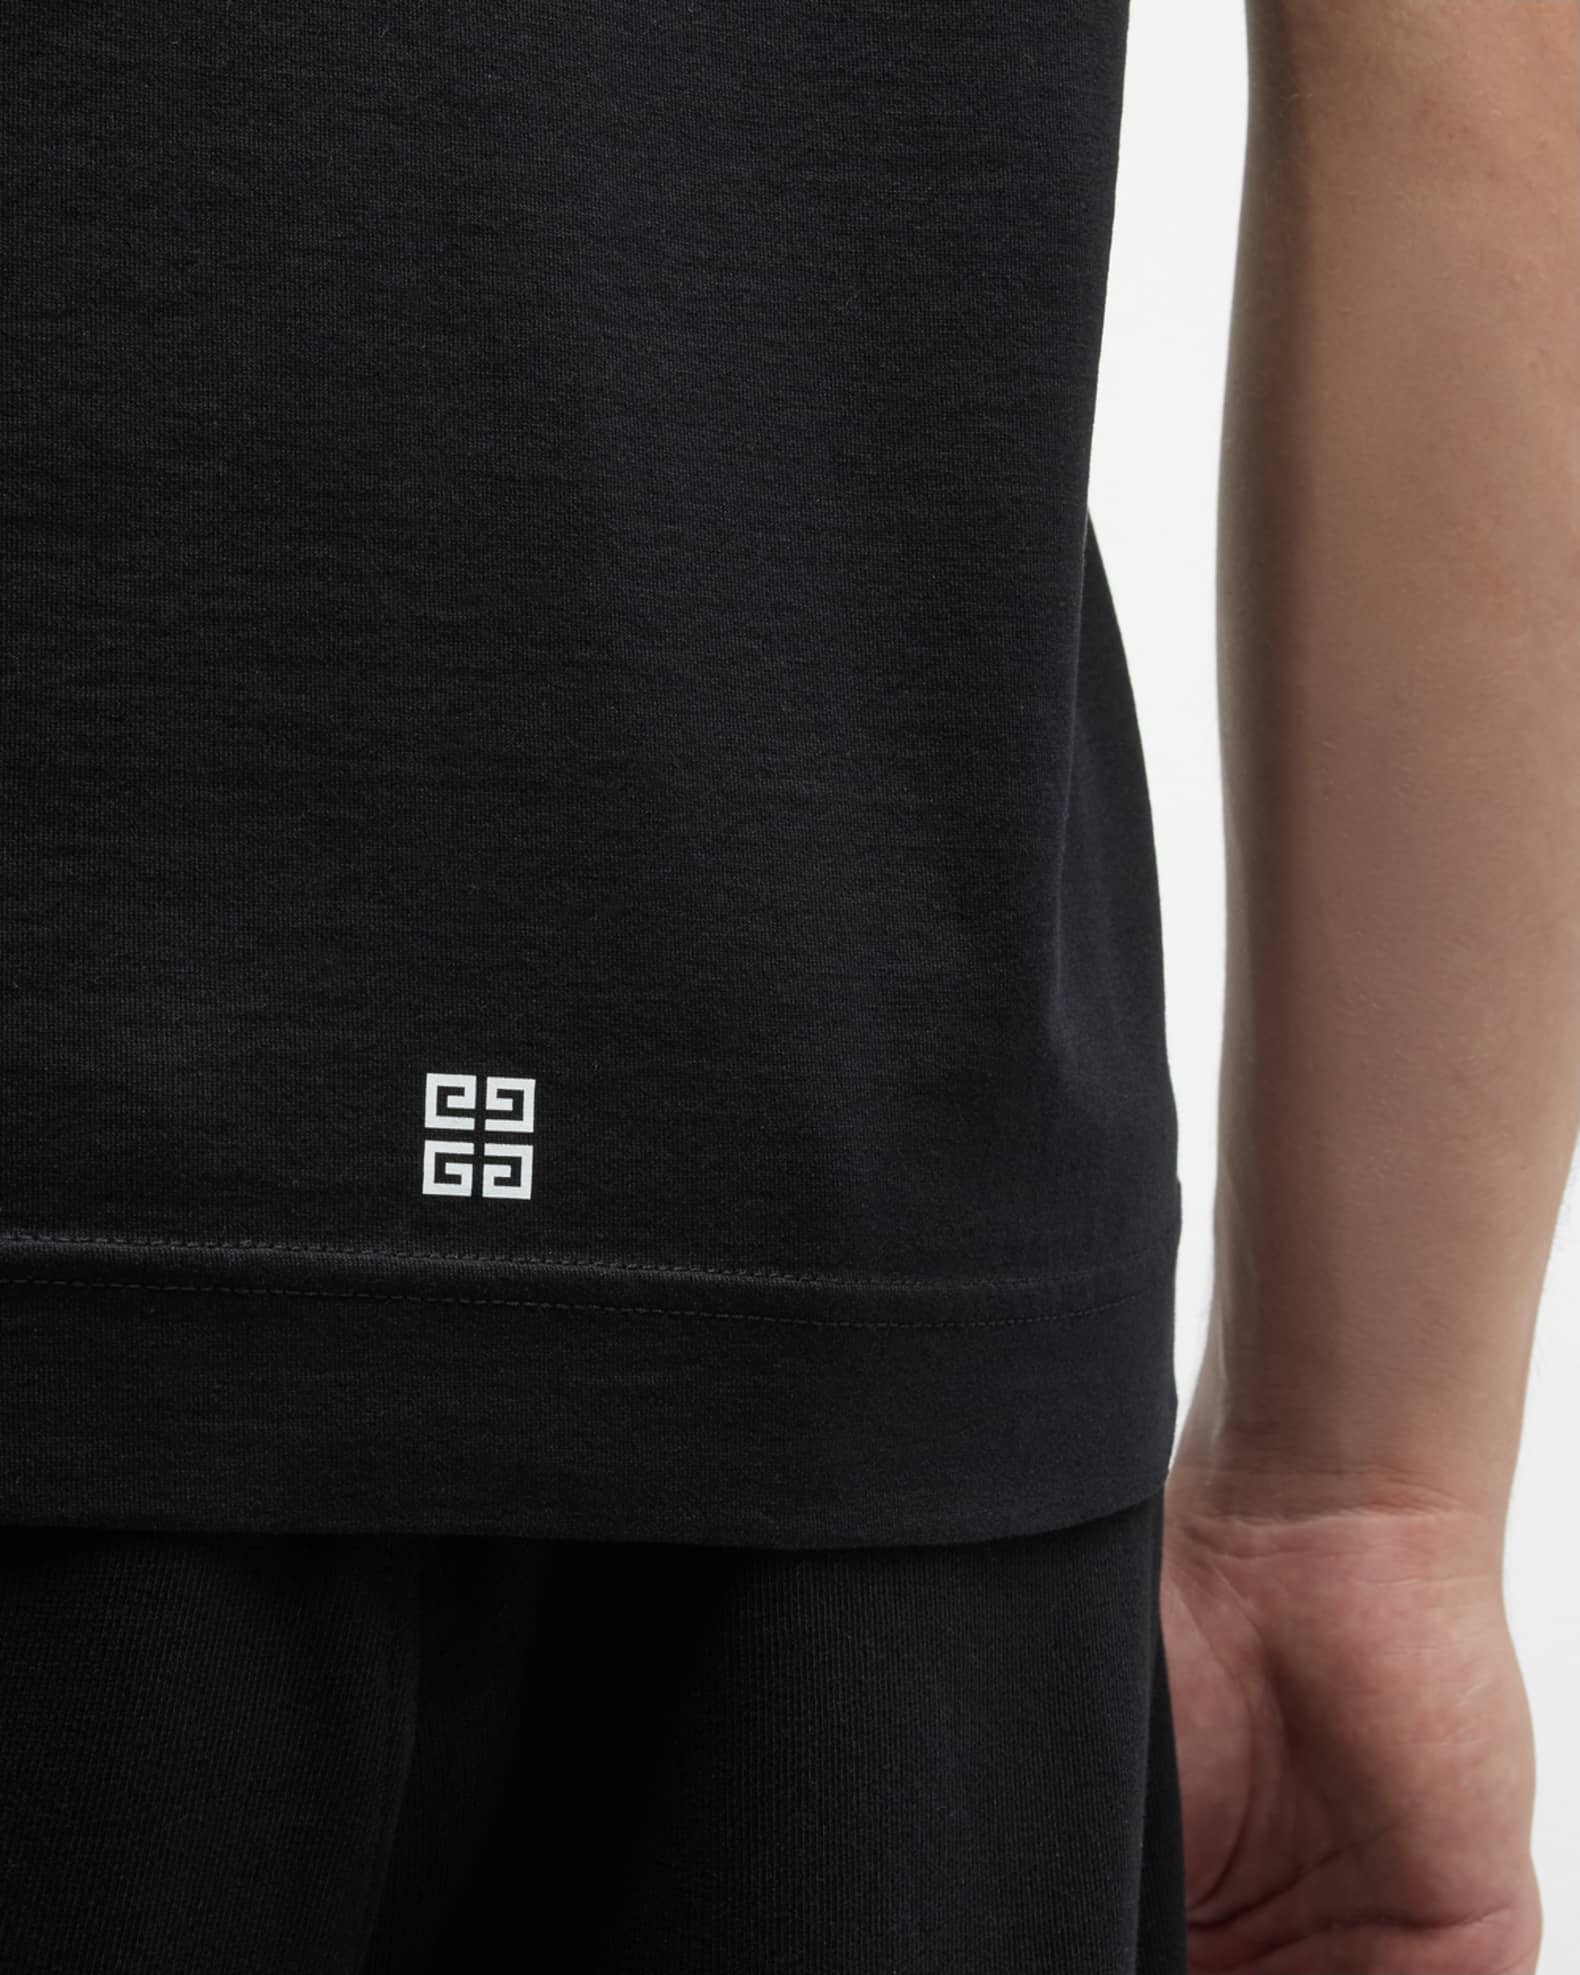 Givenchy Men's Basic Logo Crew T-Shirt | Neiman Marcus